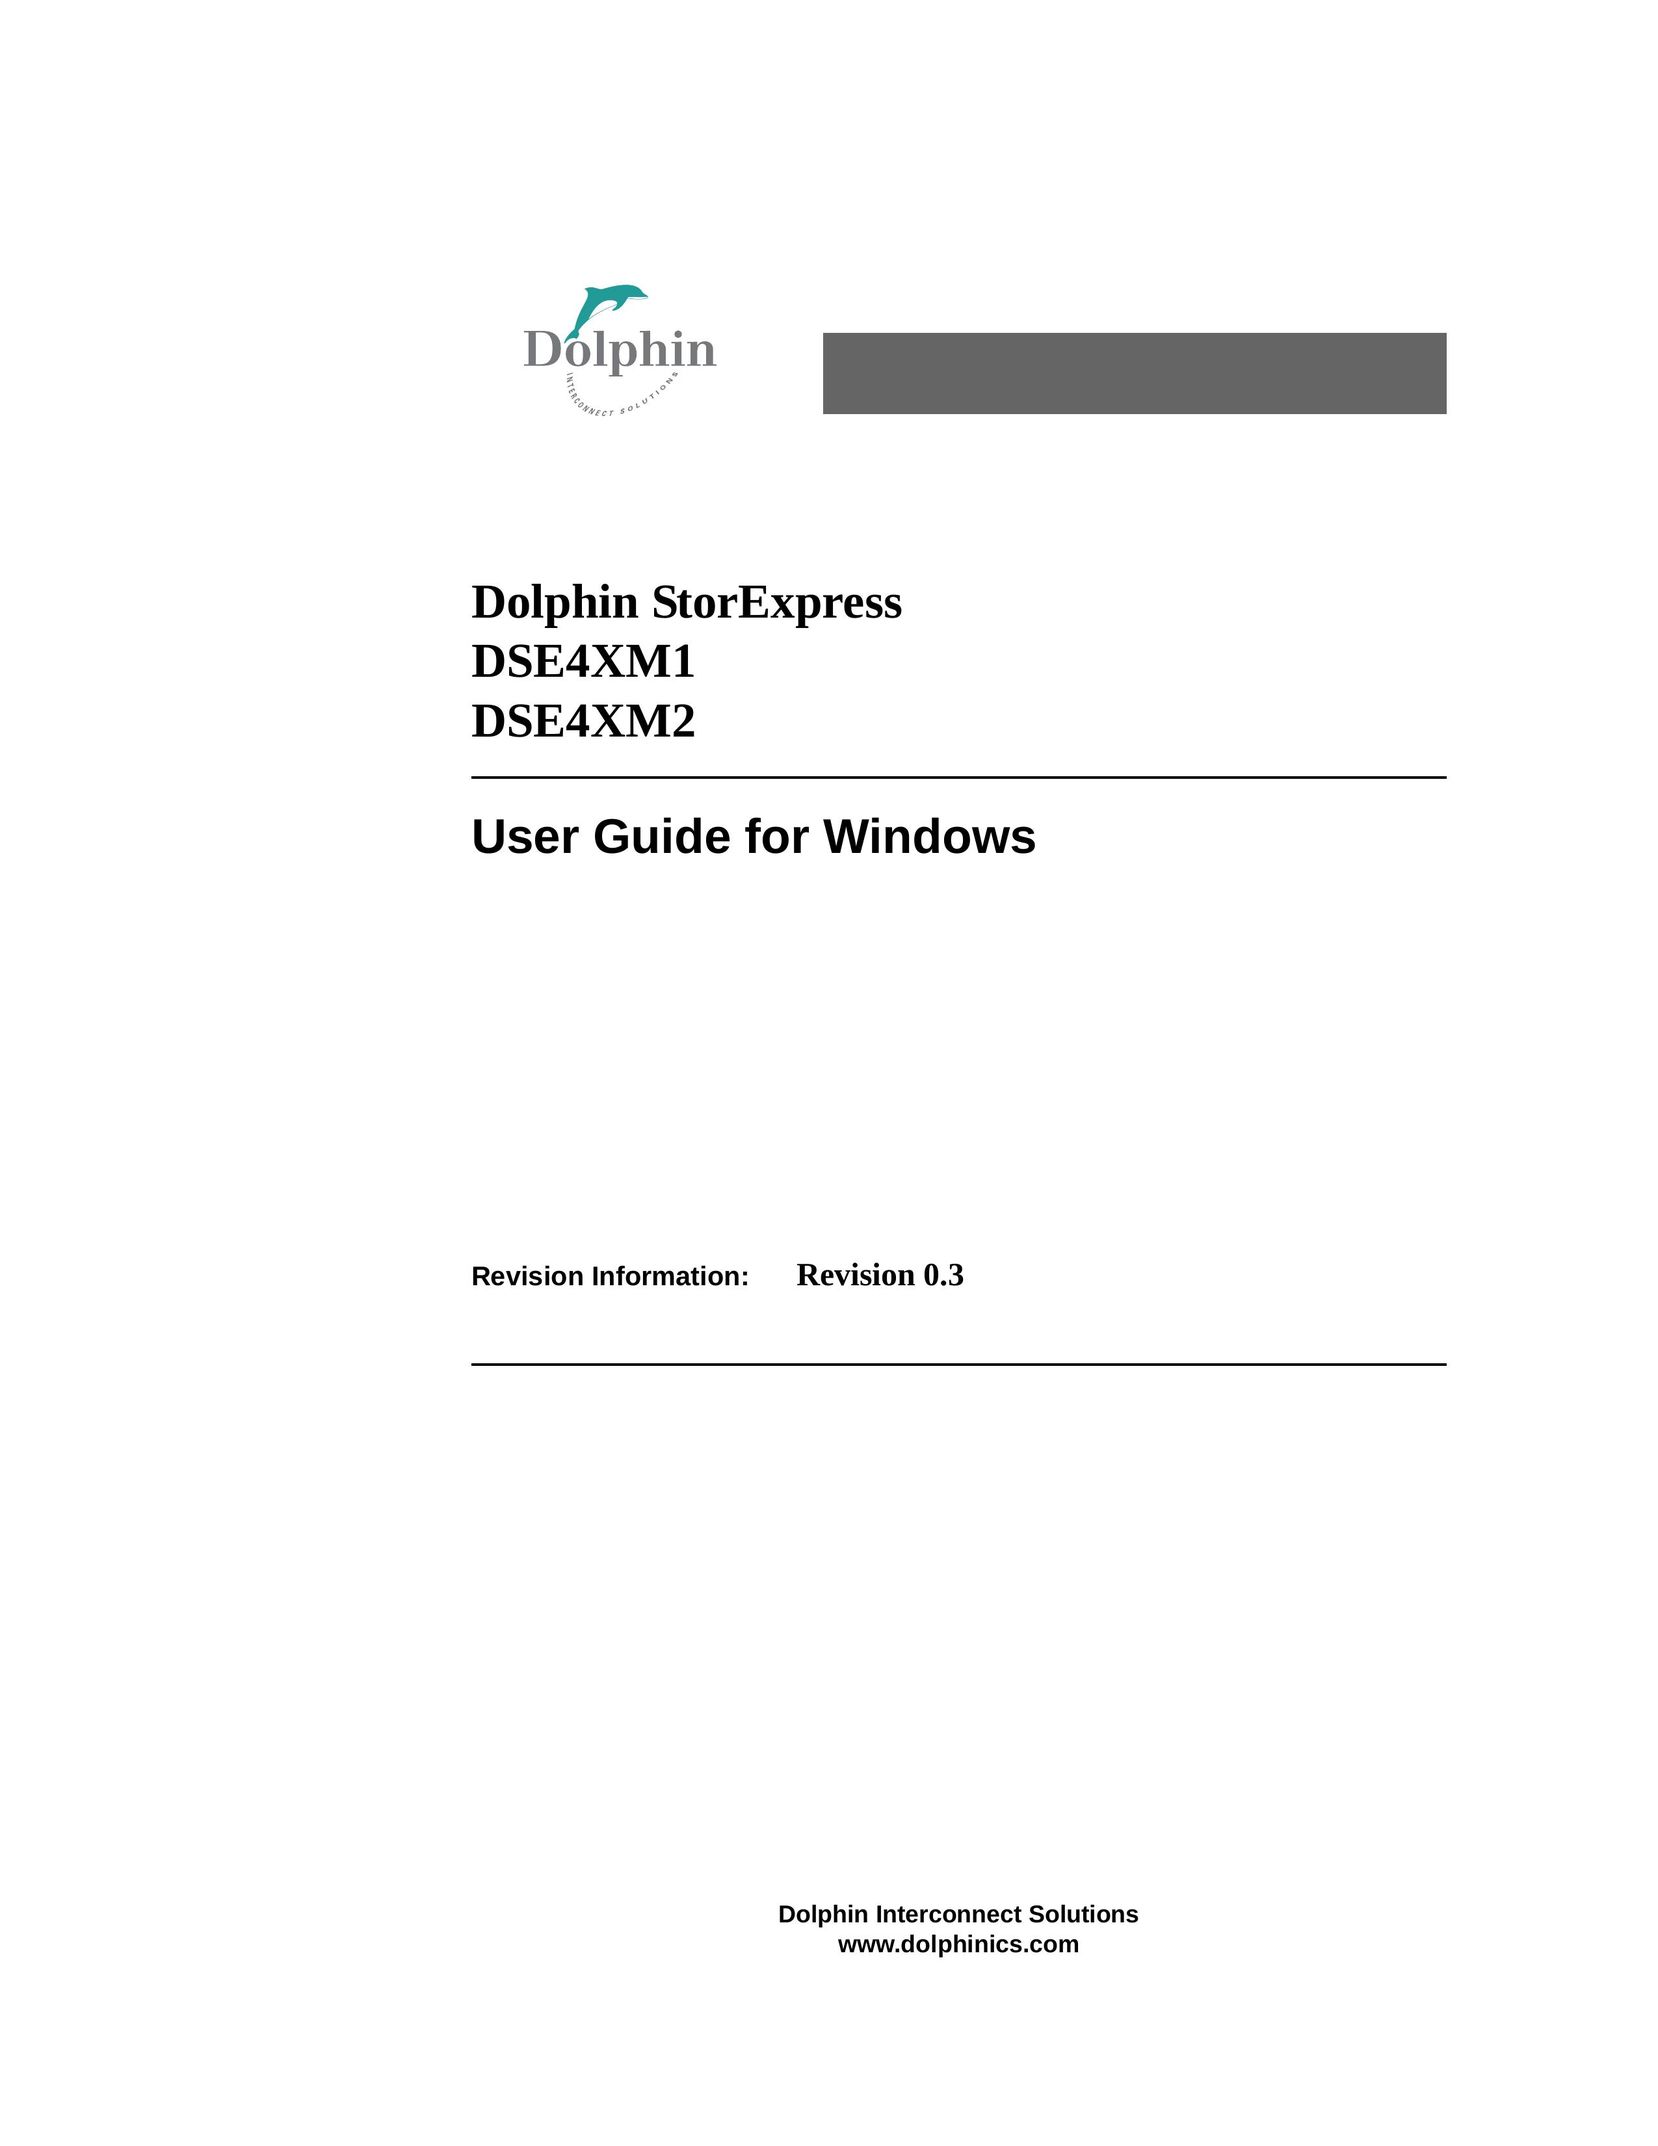 Microsoft DSE4XM2 Computer Accessories User Manual